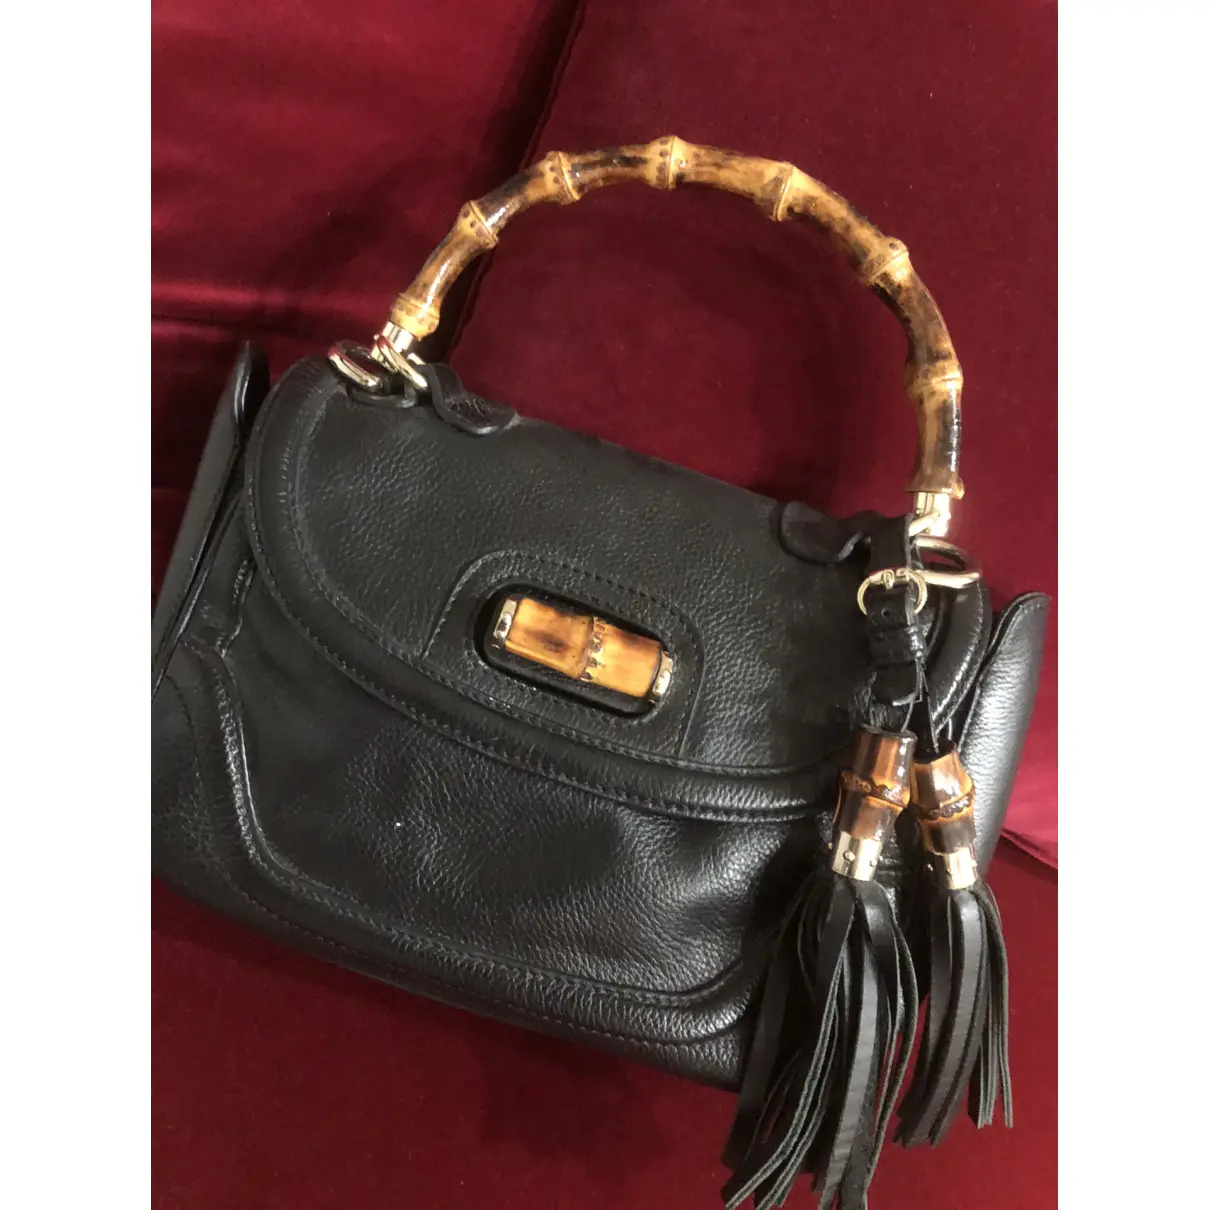 Buy Gucci Bamboo Convertible Satchel leather handbag online